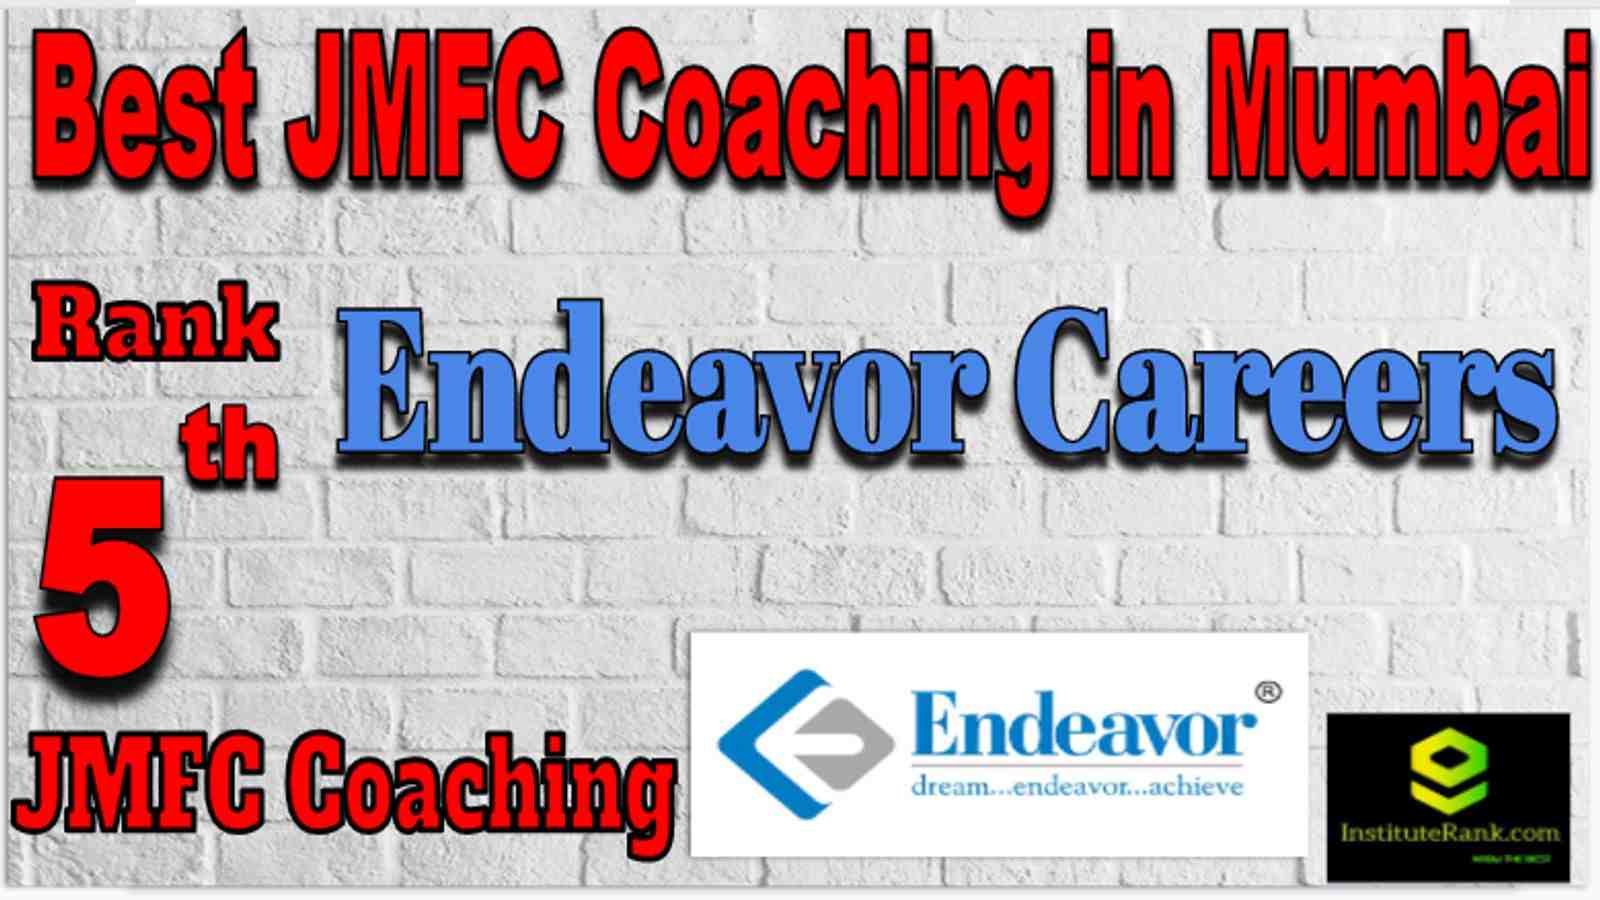 Rank 5 Best JMFC Coaching in Mumbai